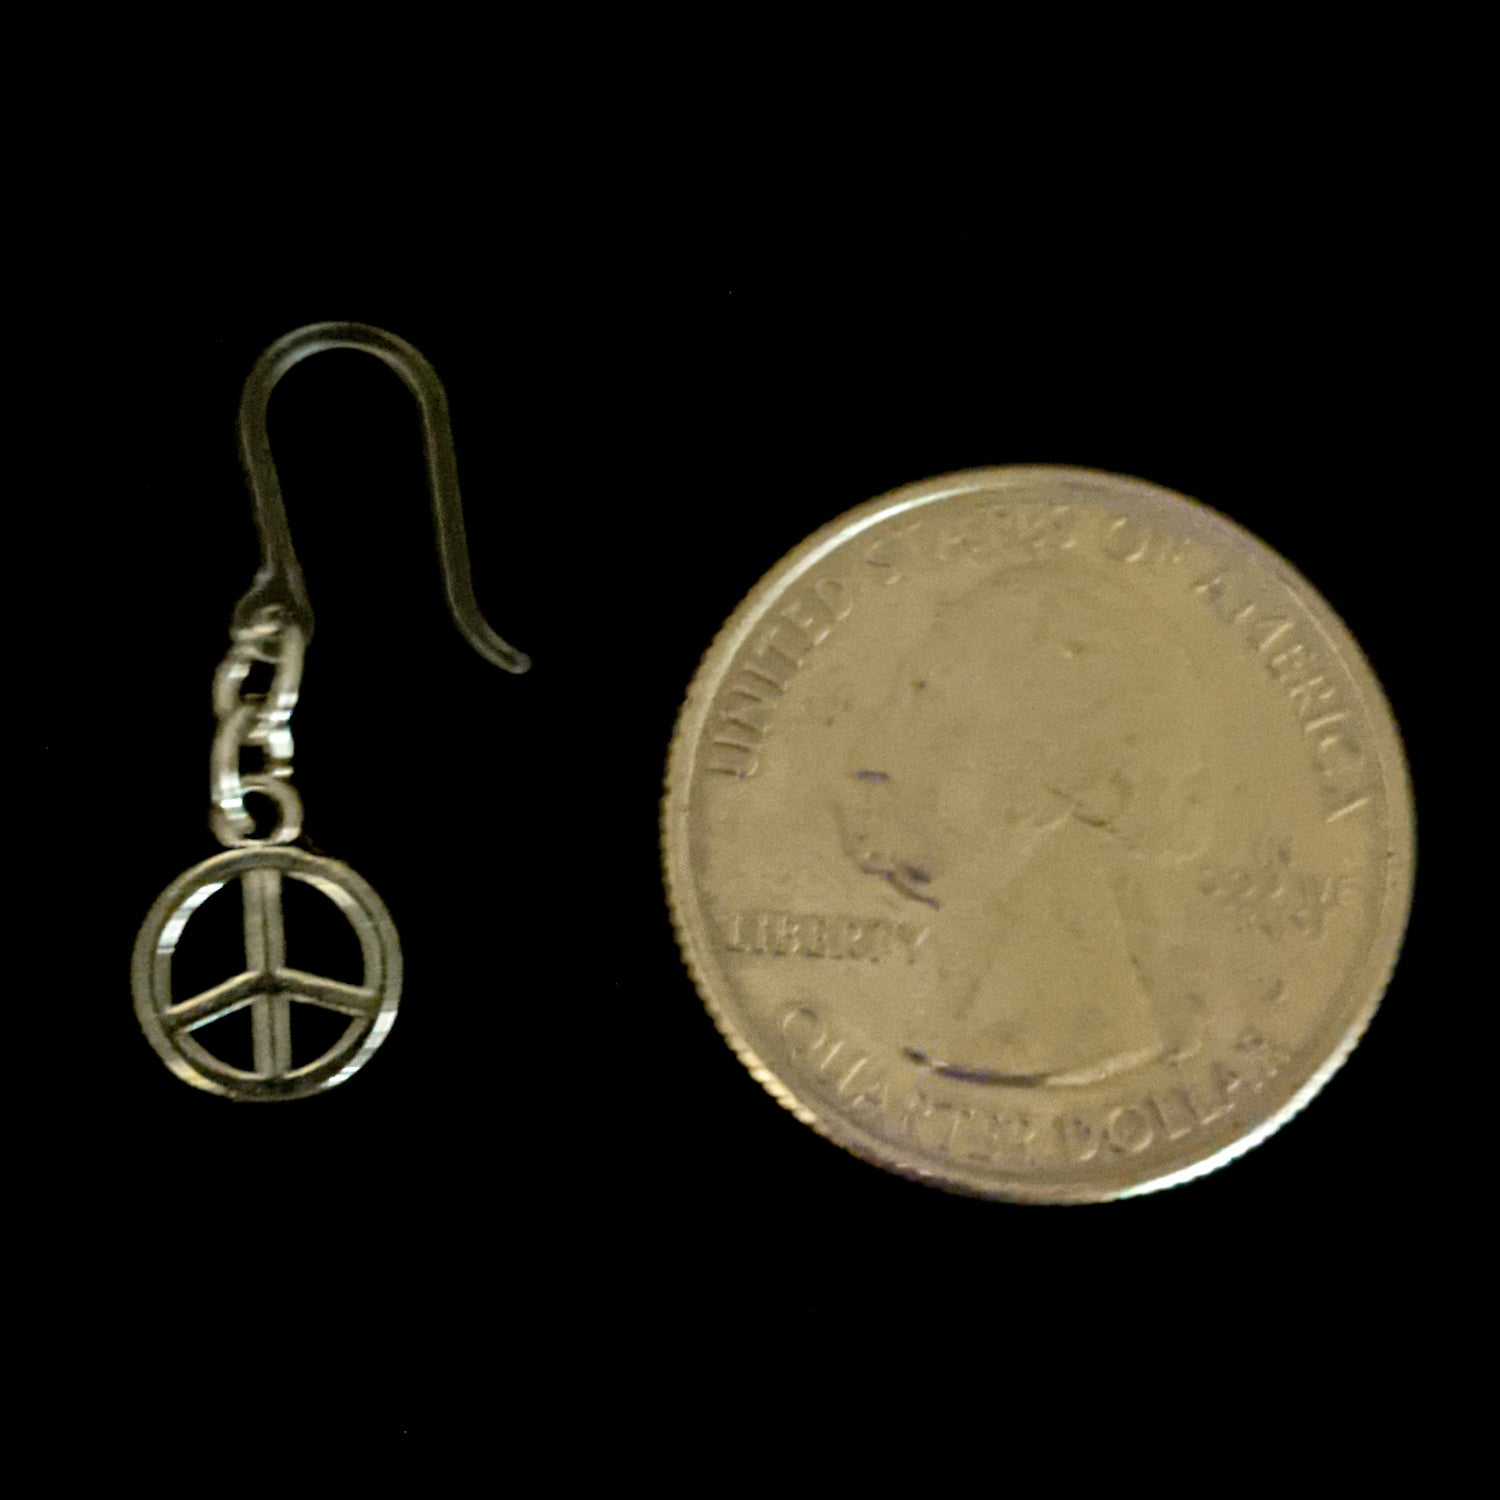 Tiny Peace Drop Earrings (Dangles) - size comp;arison quarter